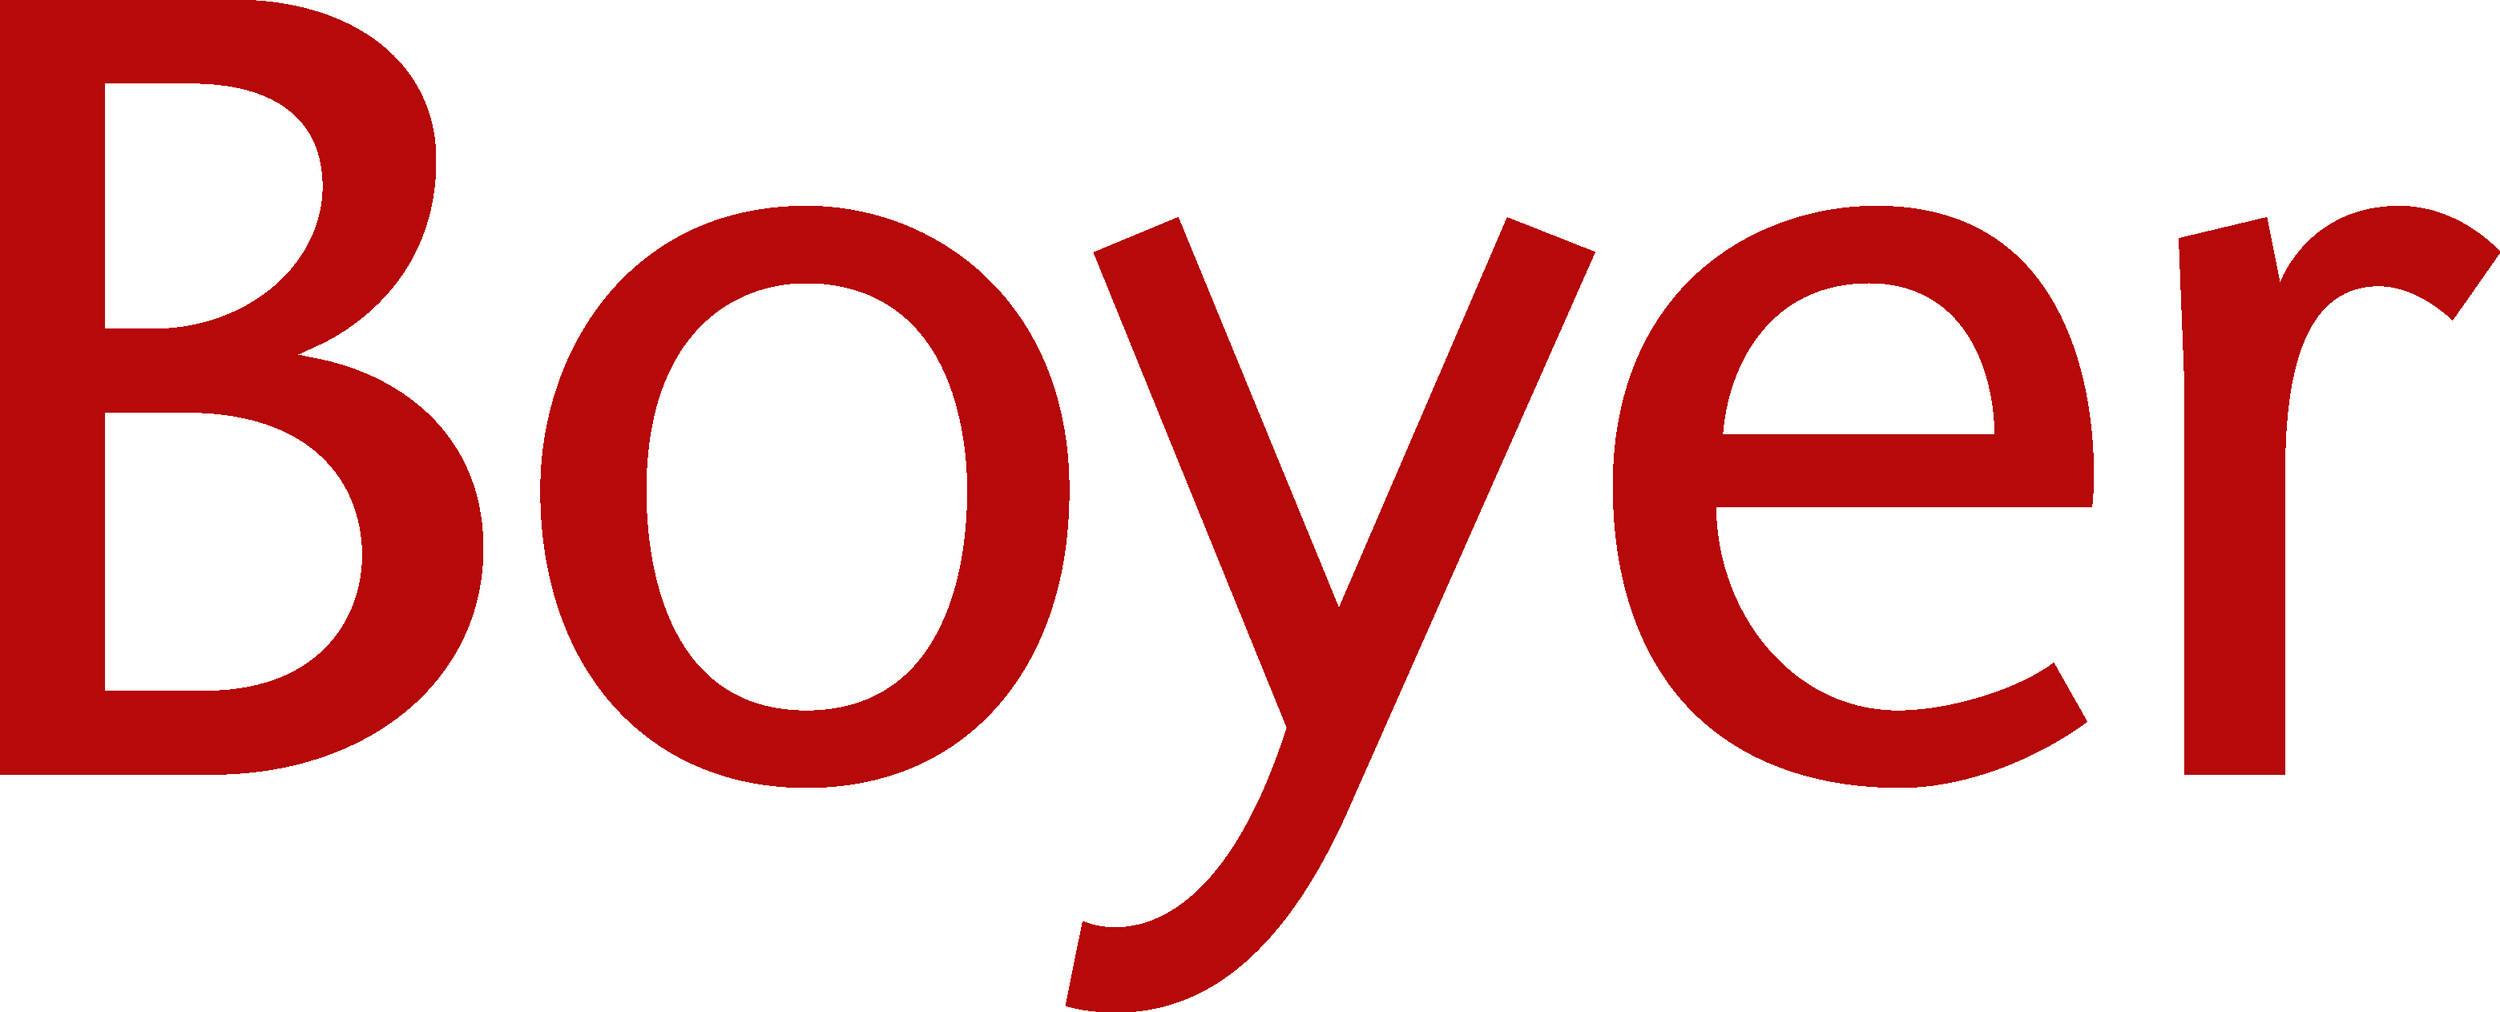 Boyer Logo.jpg